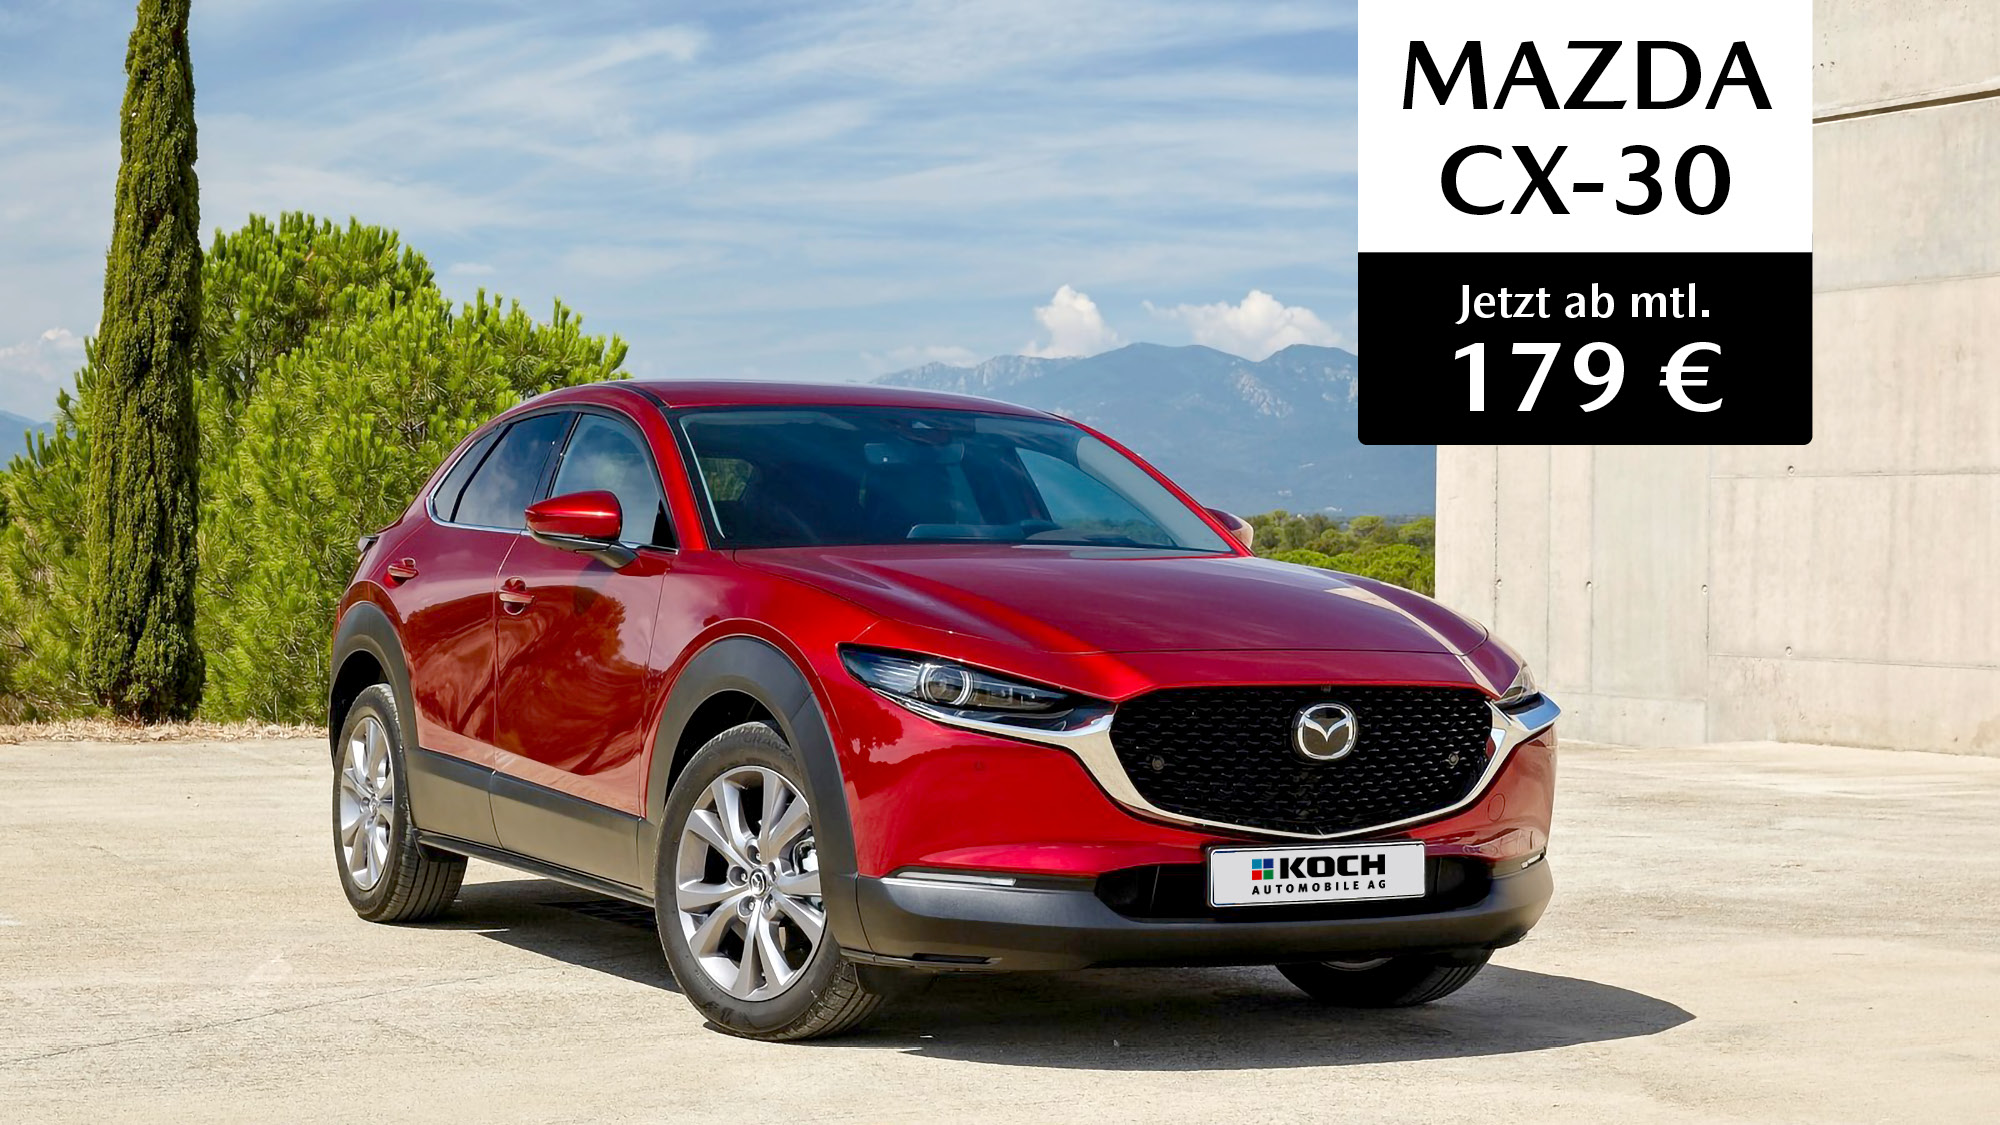 Mazda CX30 Top Angebot 179 €